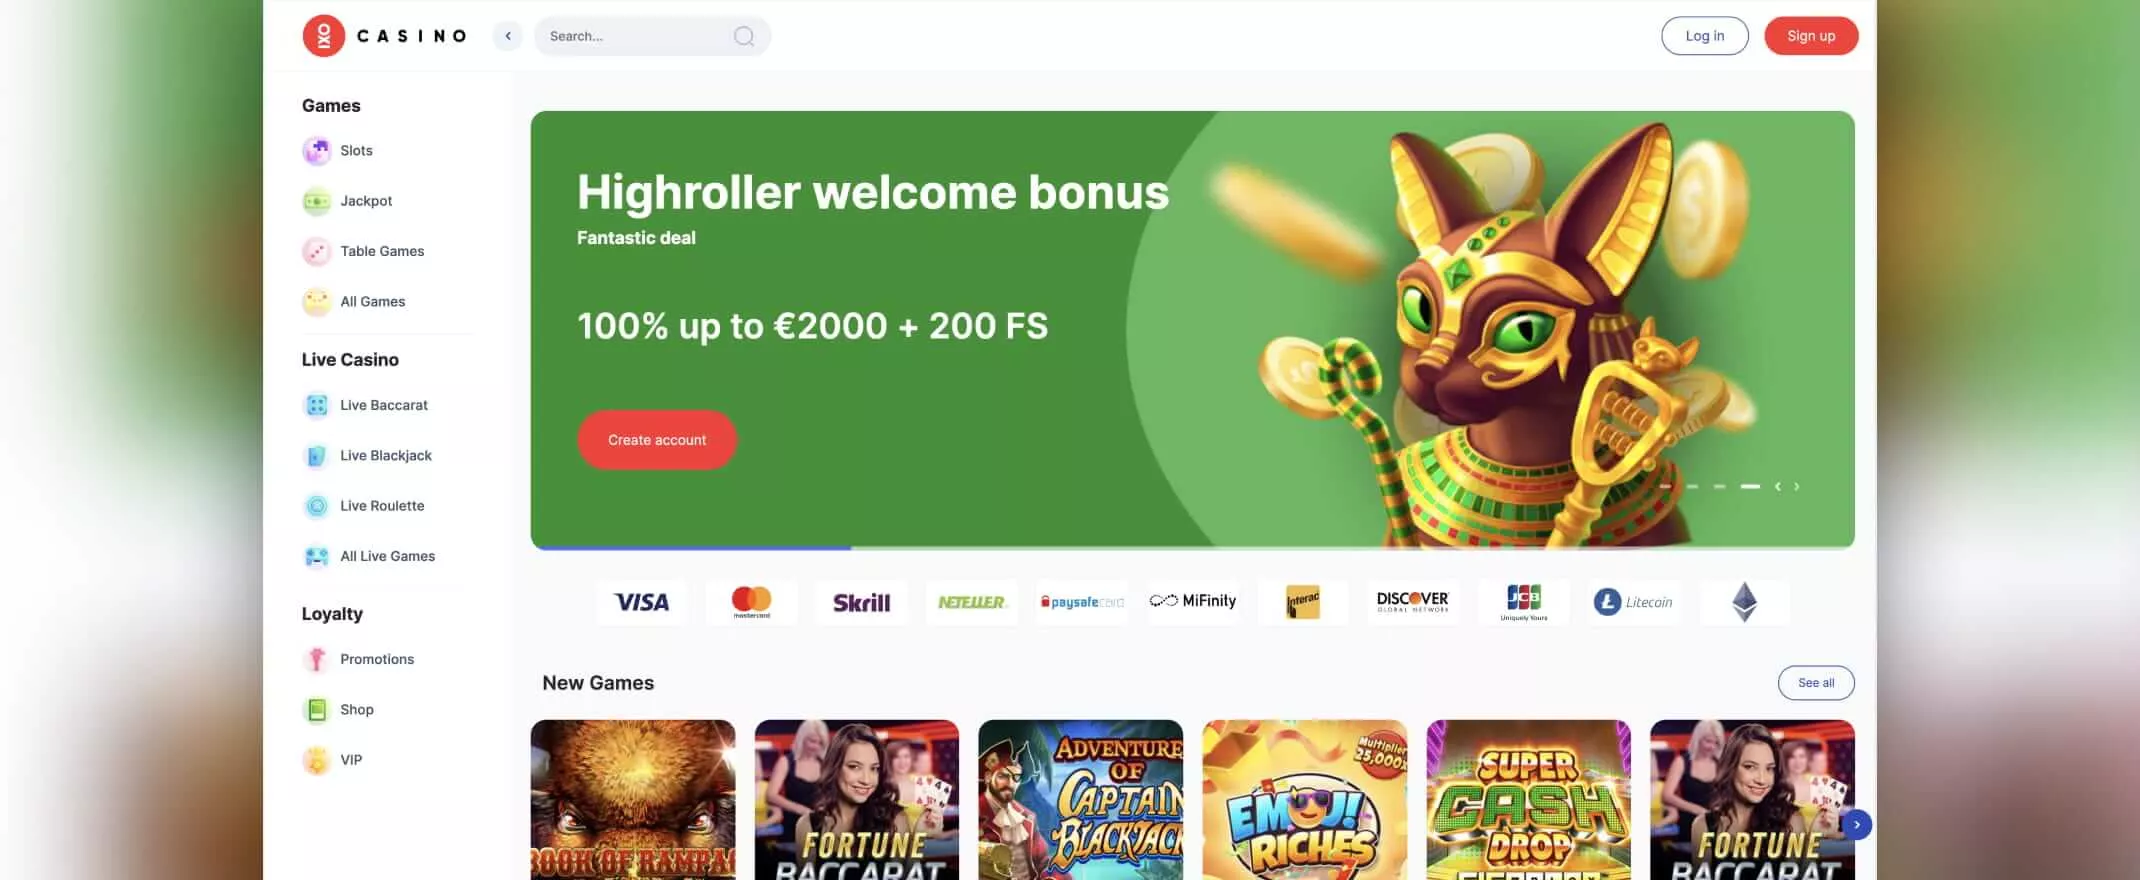 Oxi Casino screenshot of the homepage